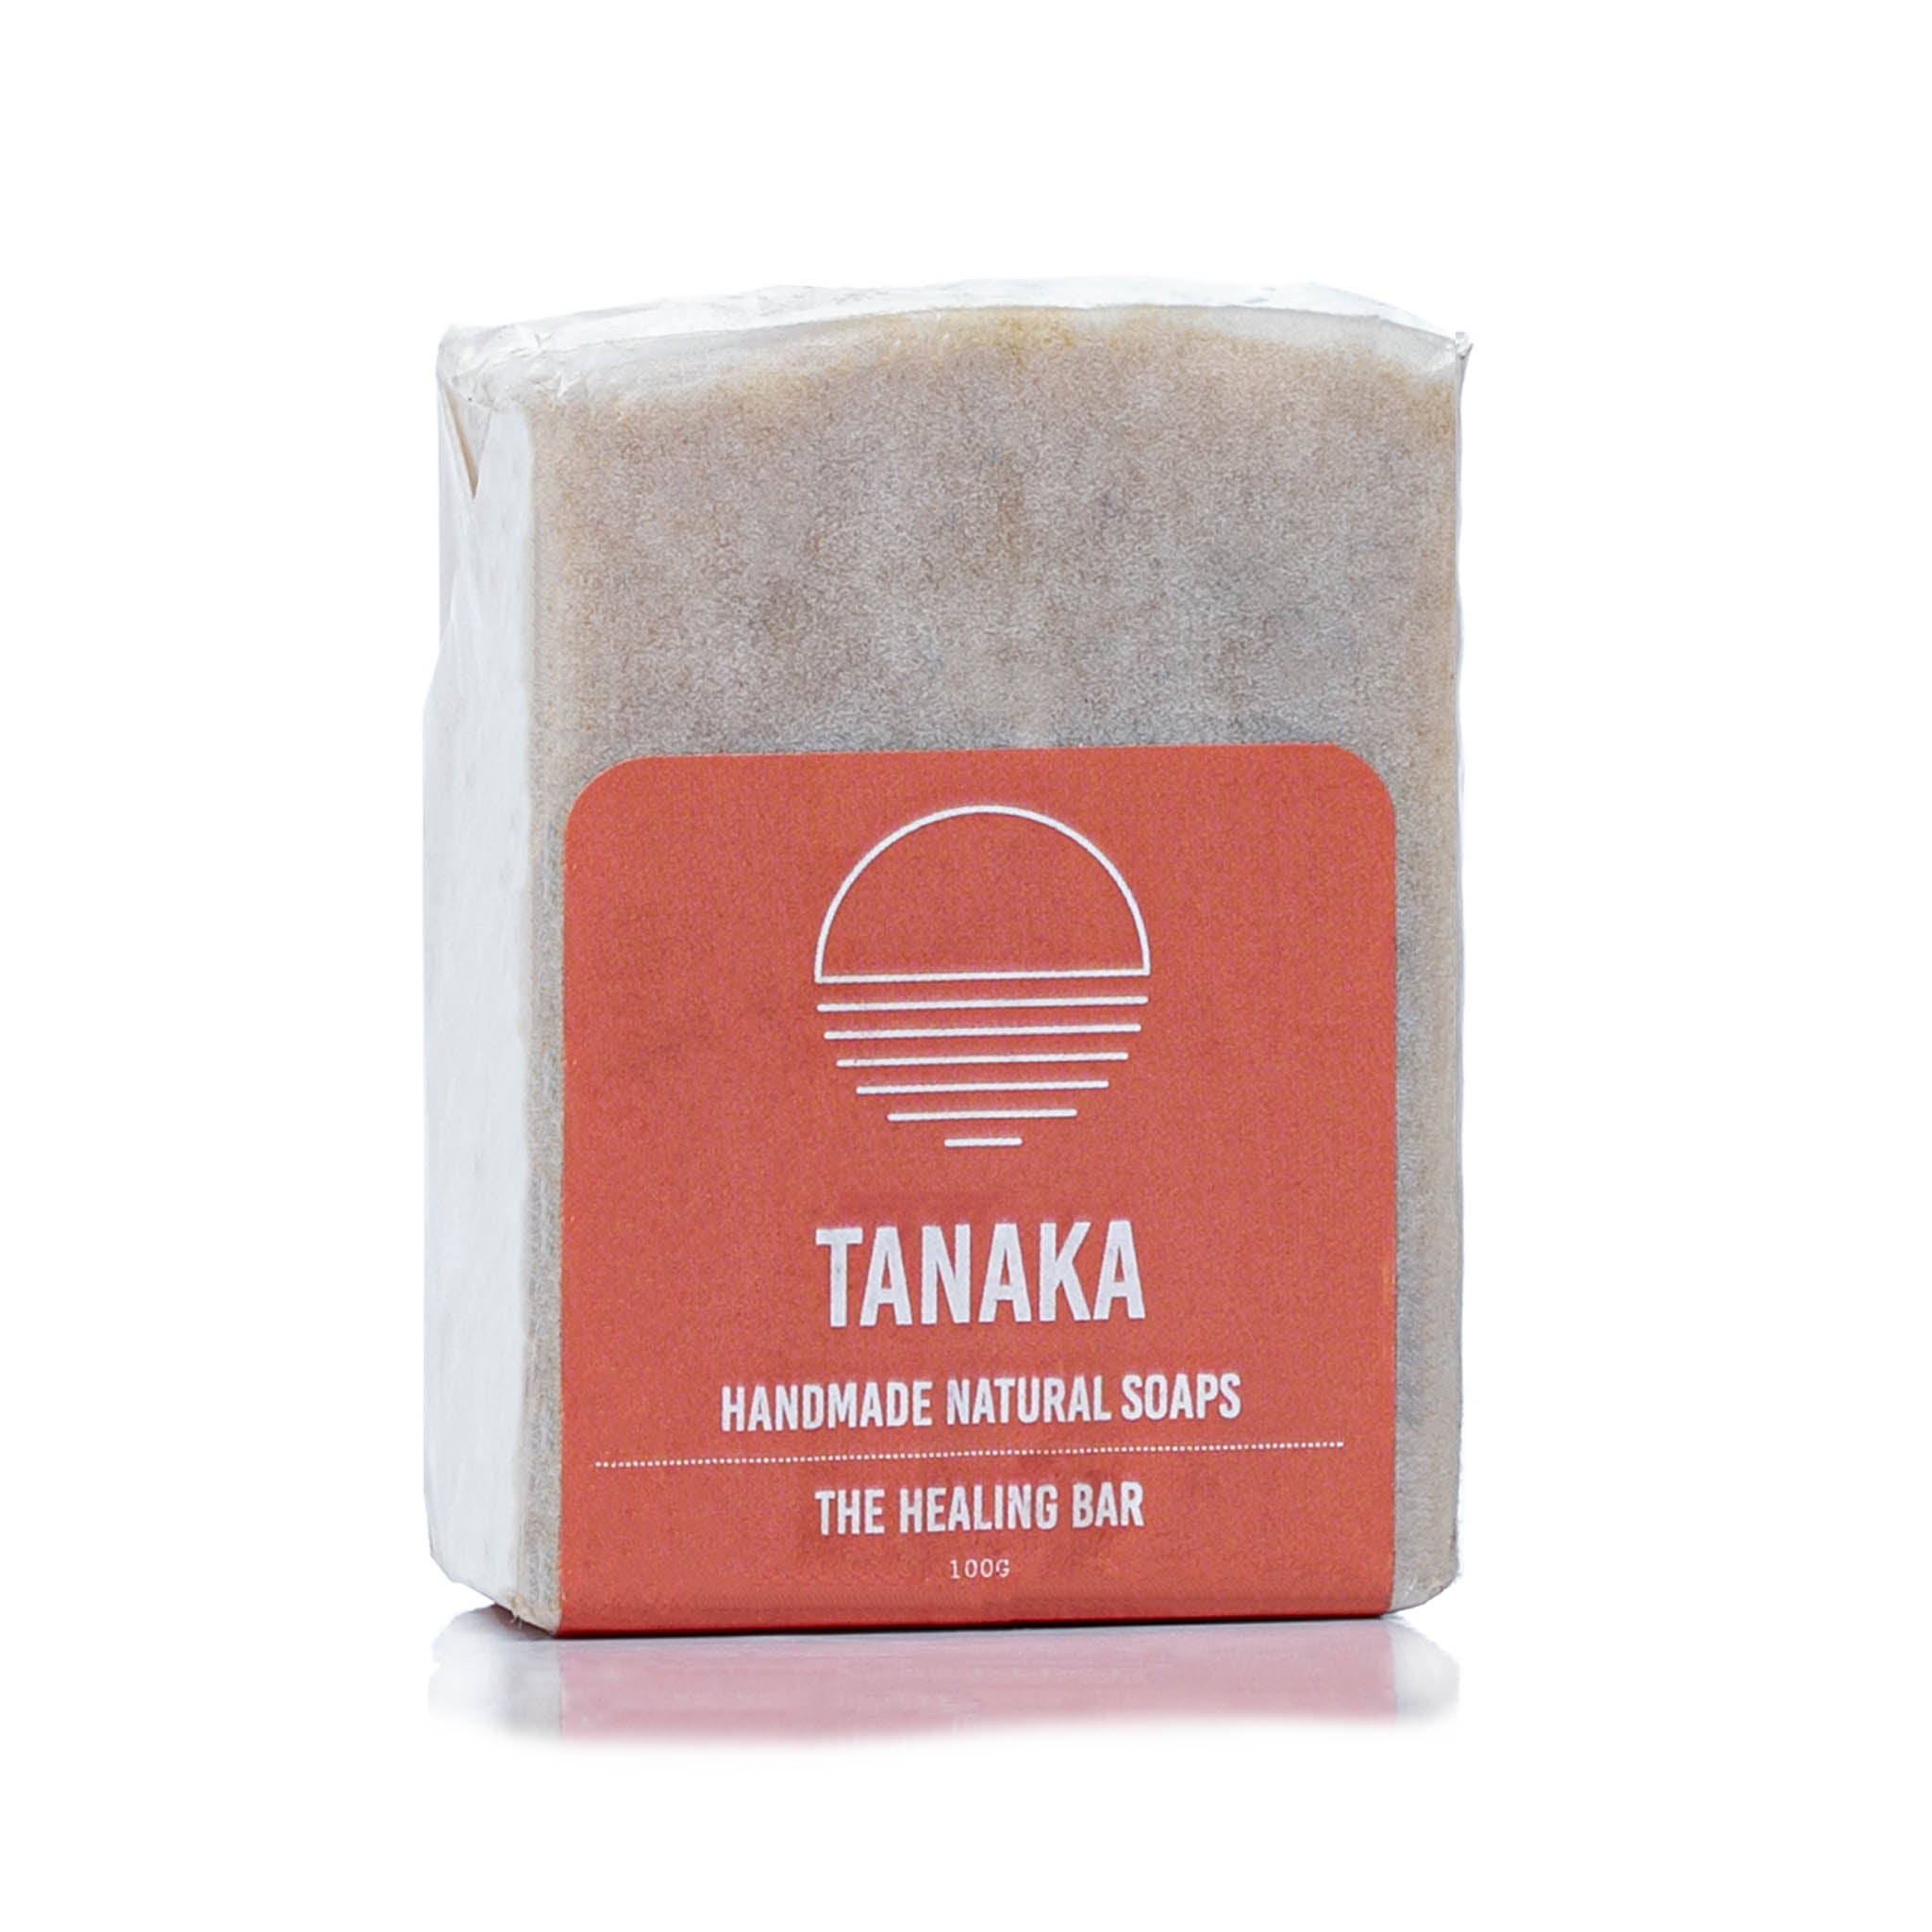 Tanaka Healing bar soap a Bracketts Beauty